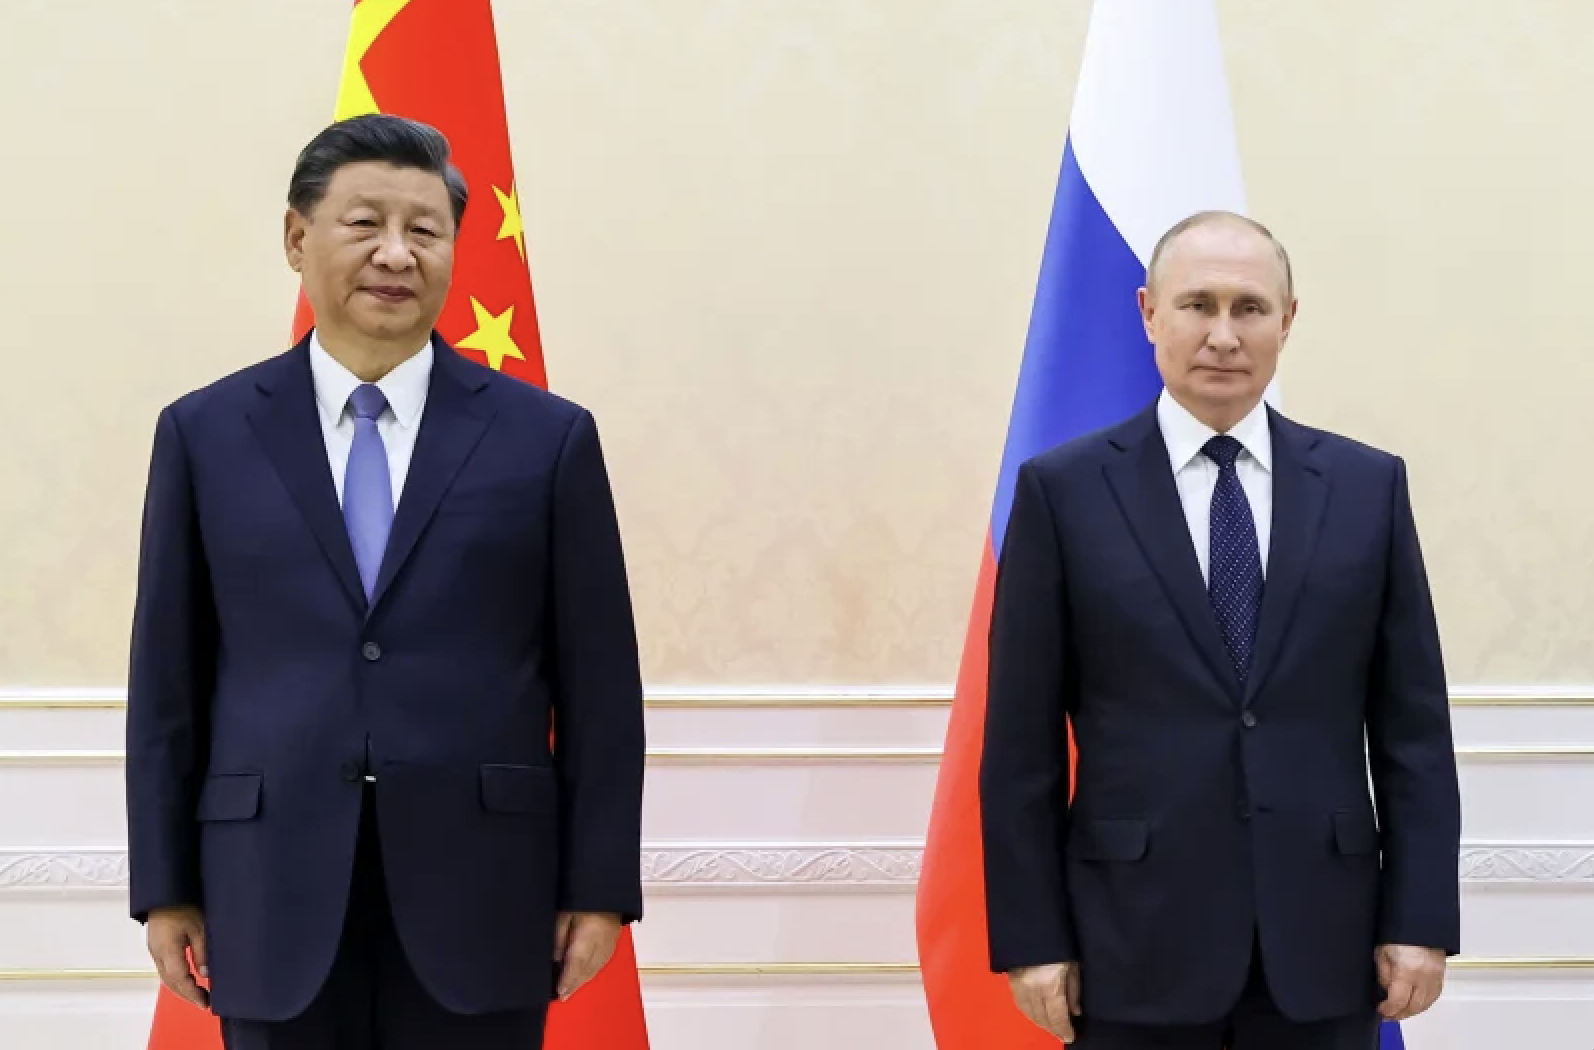 Xi and Putin met at the Shanghai Cooperation Organization summit